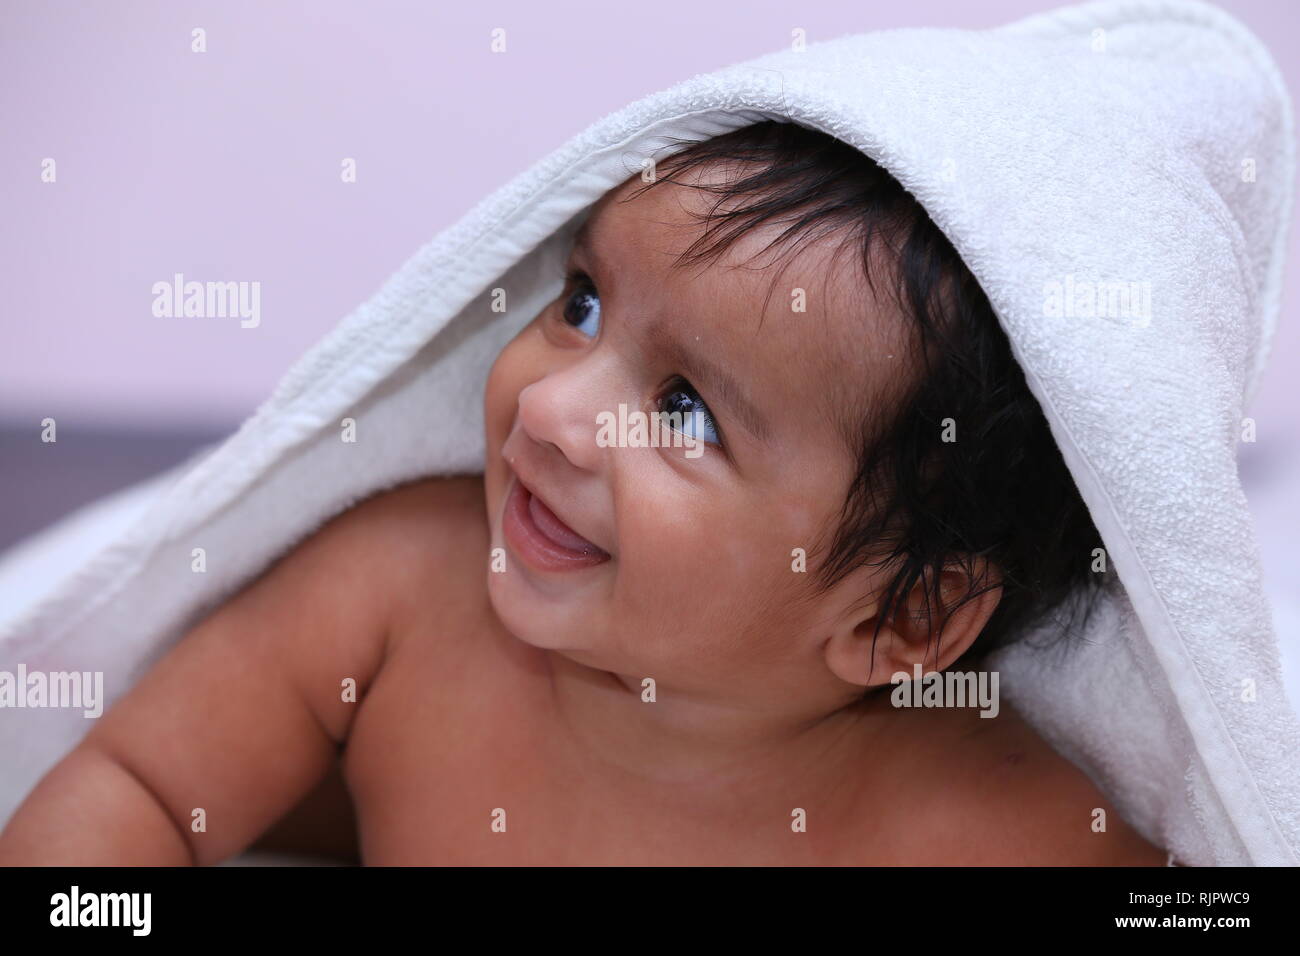 Baby Smiling Sweet Pics HD Wallpaper #05367 | wallpaperspick.com